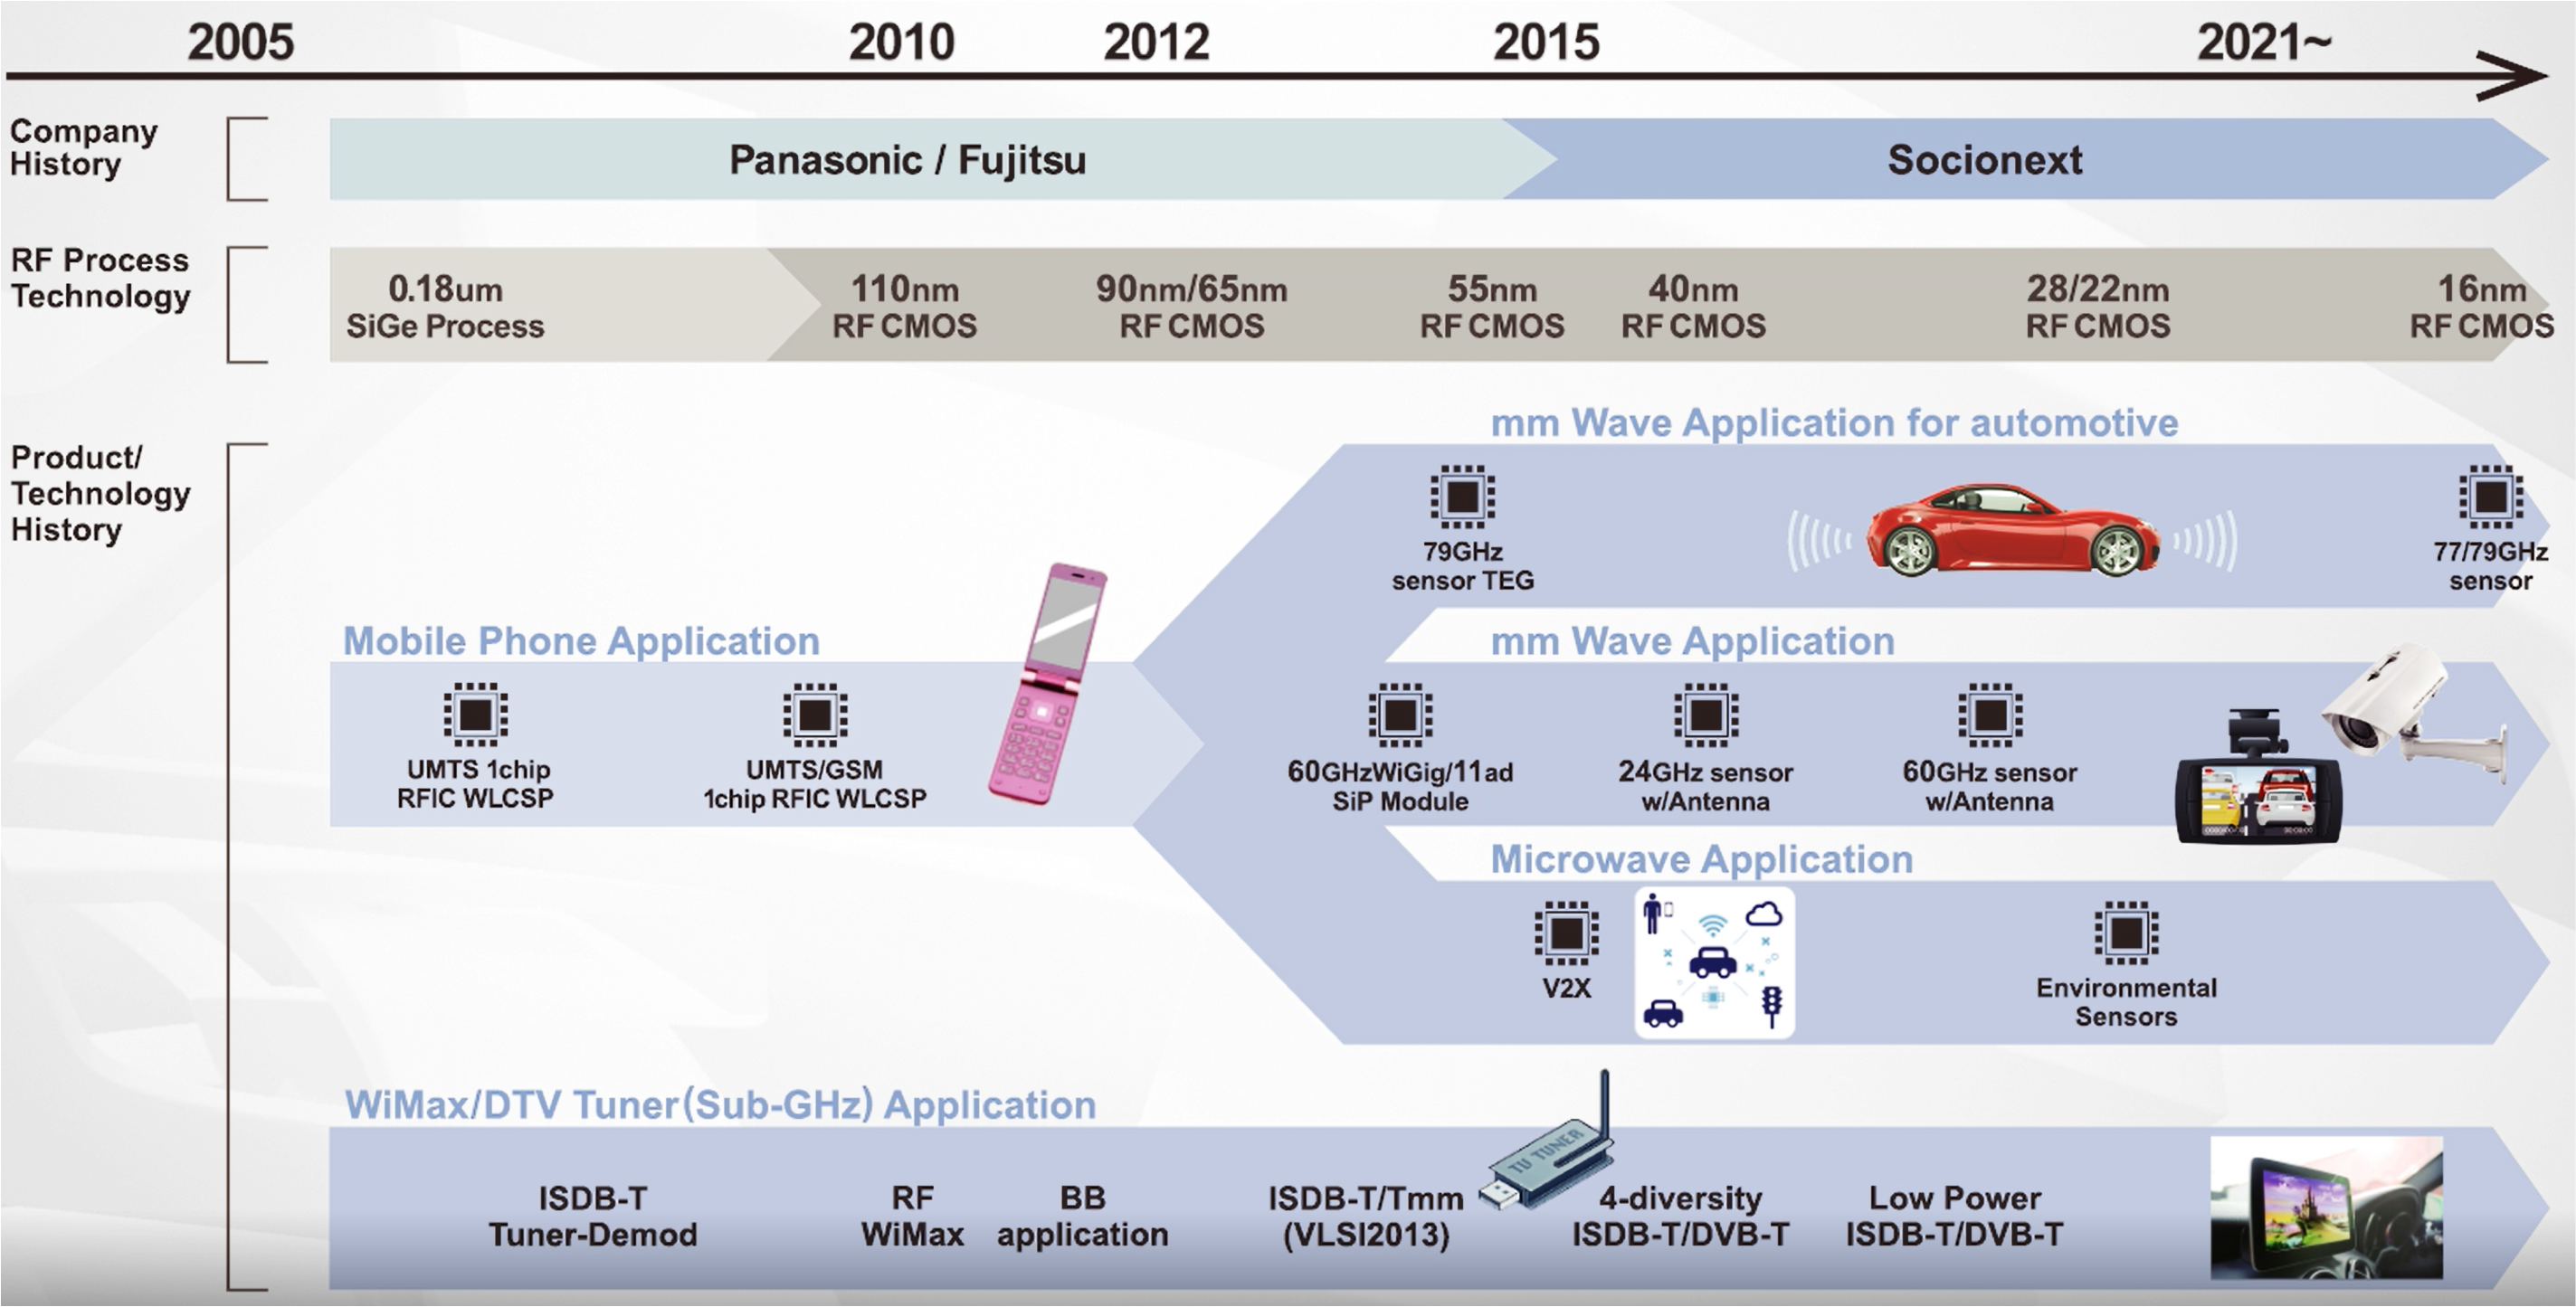 Evolution of Socionext's analog IP technology